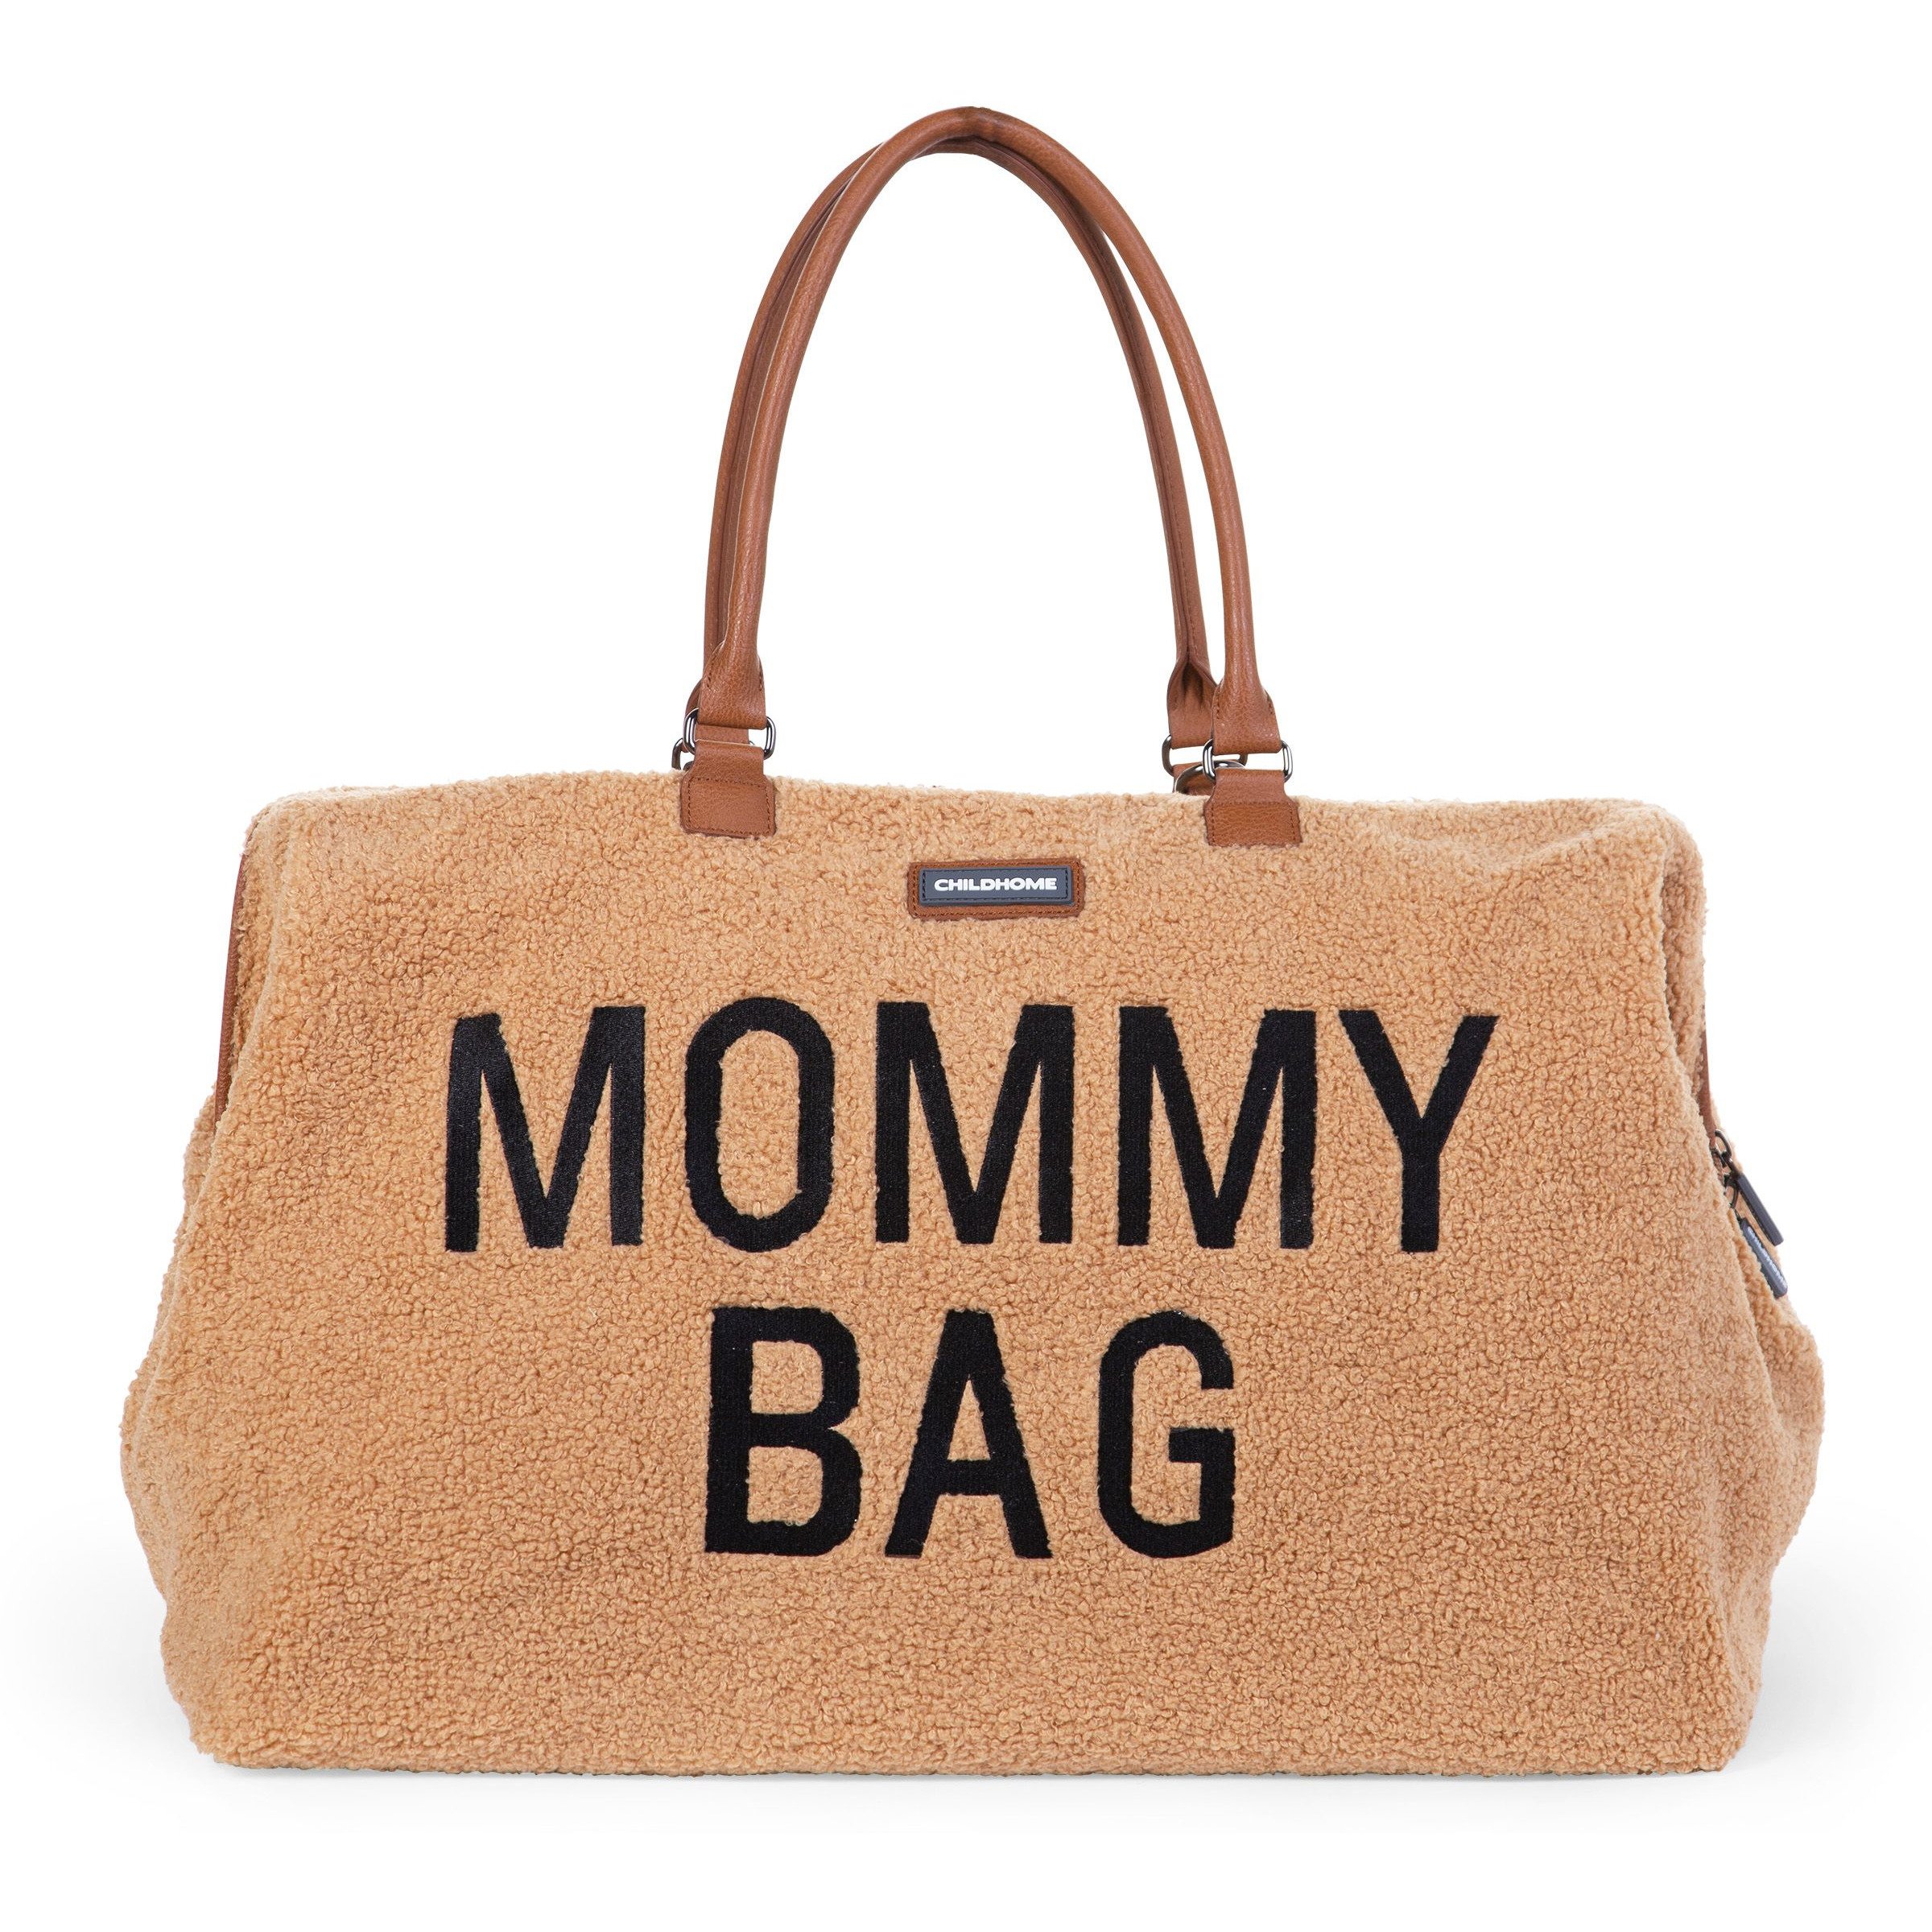 mommy-bag-teddy-neige-childhome-1_2400x2400